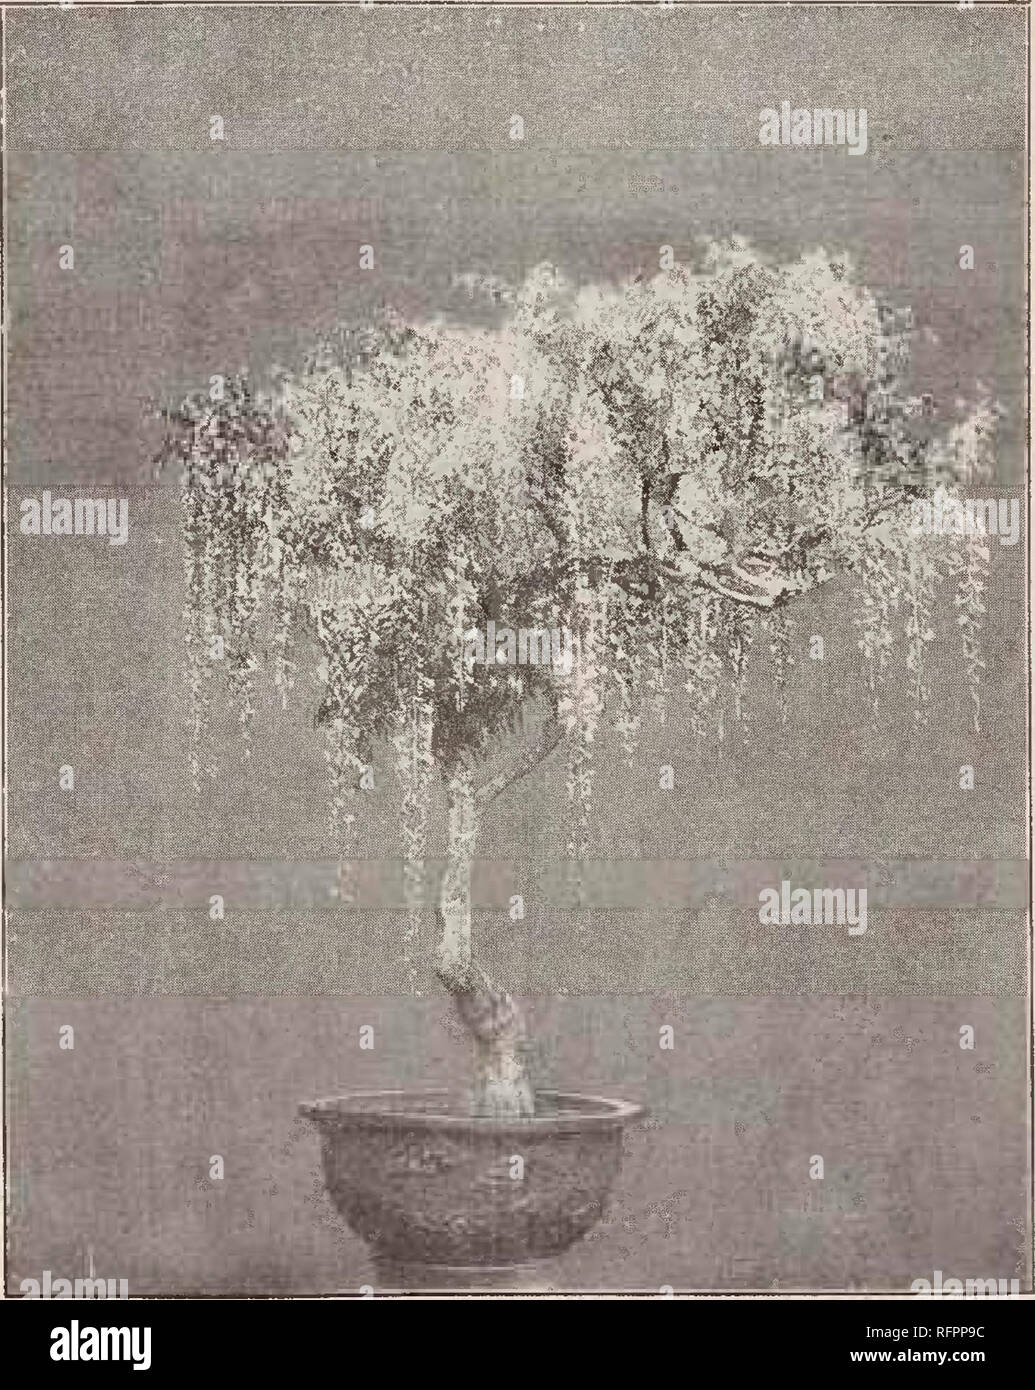 . Descriptive catalogue of the Yokohama Nursery Co., Limited. Seed industry and trade; Flowers Catalogs; Fruit Catalogs; Trees Catalogs; Shrubs Catalogs. 74 CATALOGUE OF THE YOKOHAMA NURSERY Co., Ltd.. (1911). â SHORTIA TJKIFLOKA. Sedum Sieboldi, perennial clustered pink flowers, very fine, J inch across suitable for hanging basketsâper 10, $1.30. Sednm Sieboldi, variegated leavesâper 10, $1.60. Senecio kaempferi, circular lustorous large leaves, yellow chrysanthemum-like flowers, ornamental evergreen per- ennialâper 10, $1.40. Senecio kiempferi, variegated foliage â per 10, $1.60. Simicifuga  Stock Photo